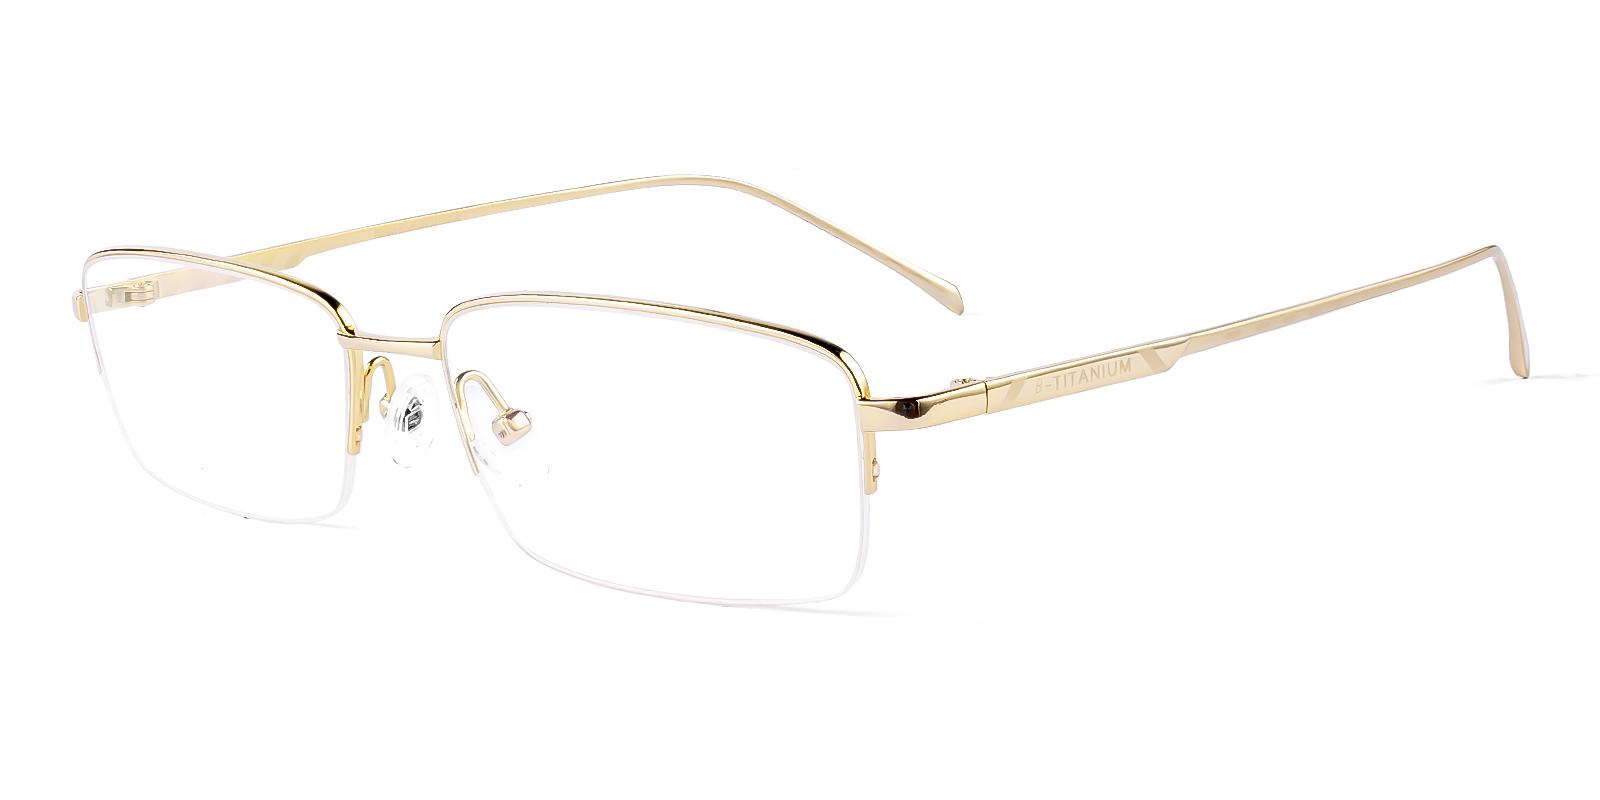 Mammoar Gold Titanium Eyeglasses , NosePads Frames from ABBE Glasses